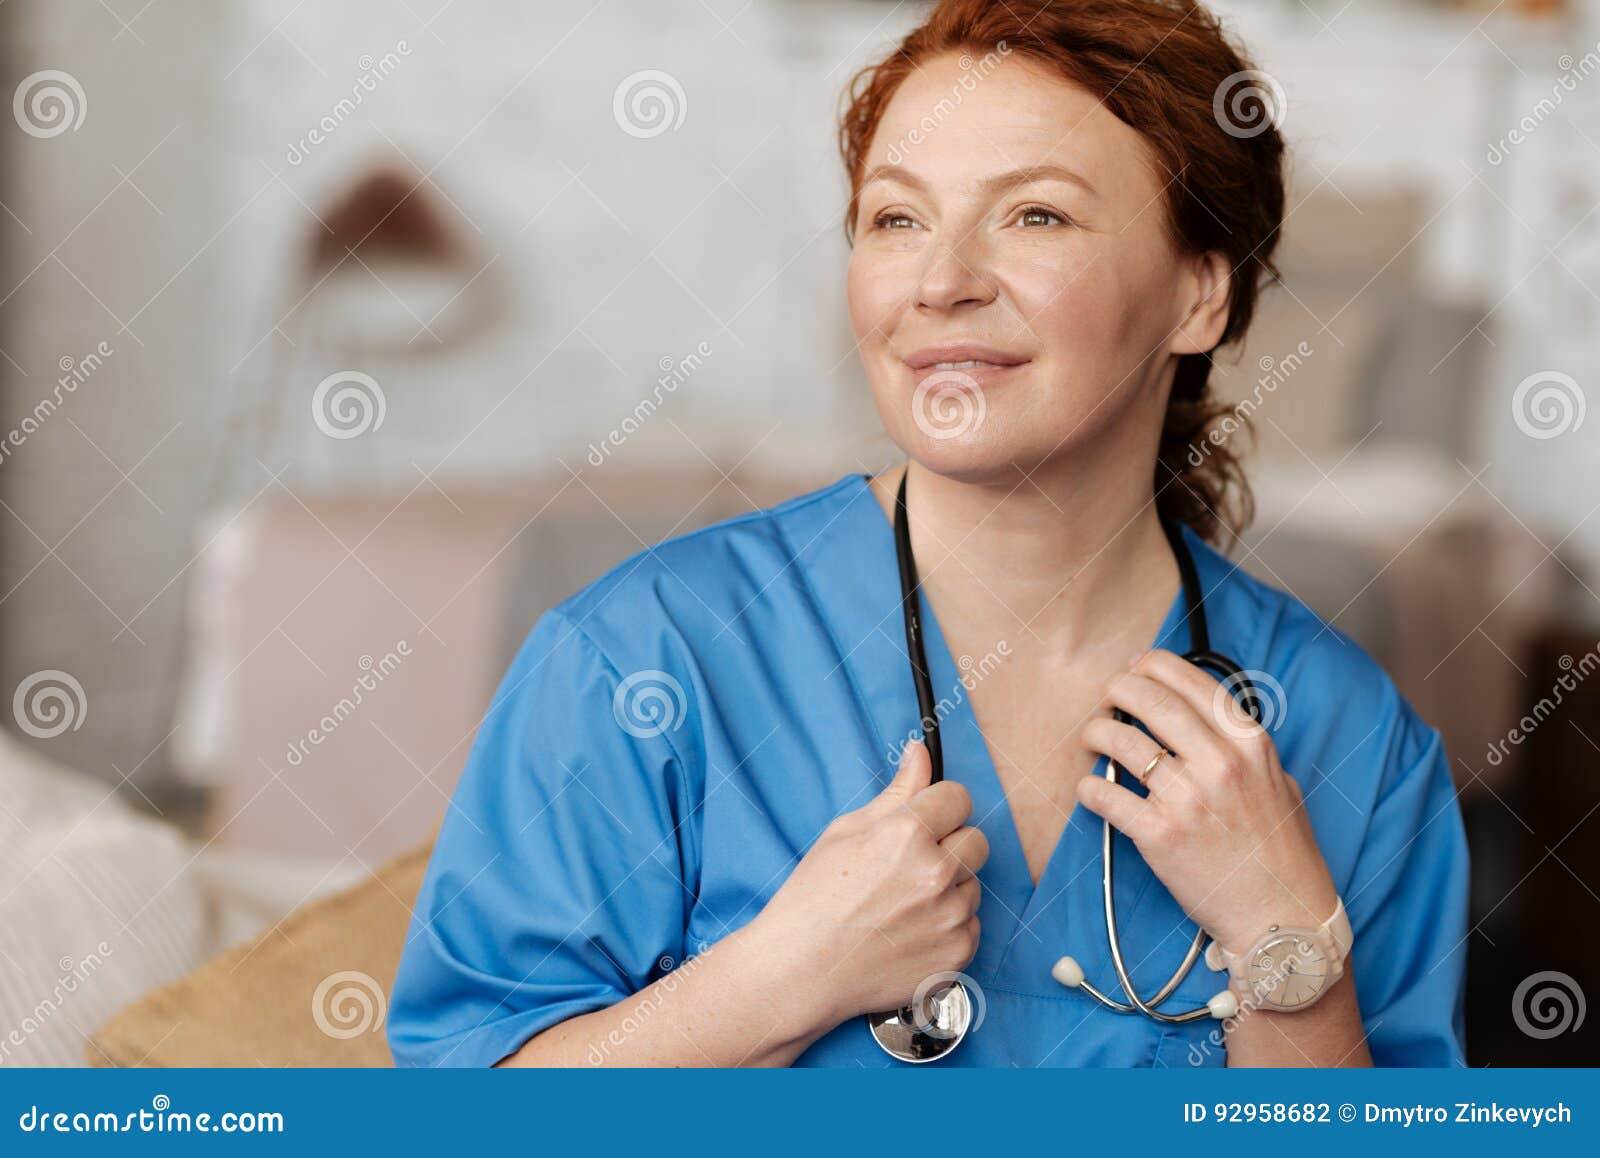 Portrait of Stunning Professional Qualified Nurse Stock Photo - Image